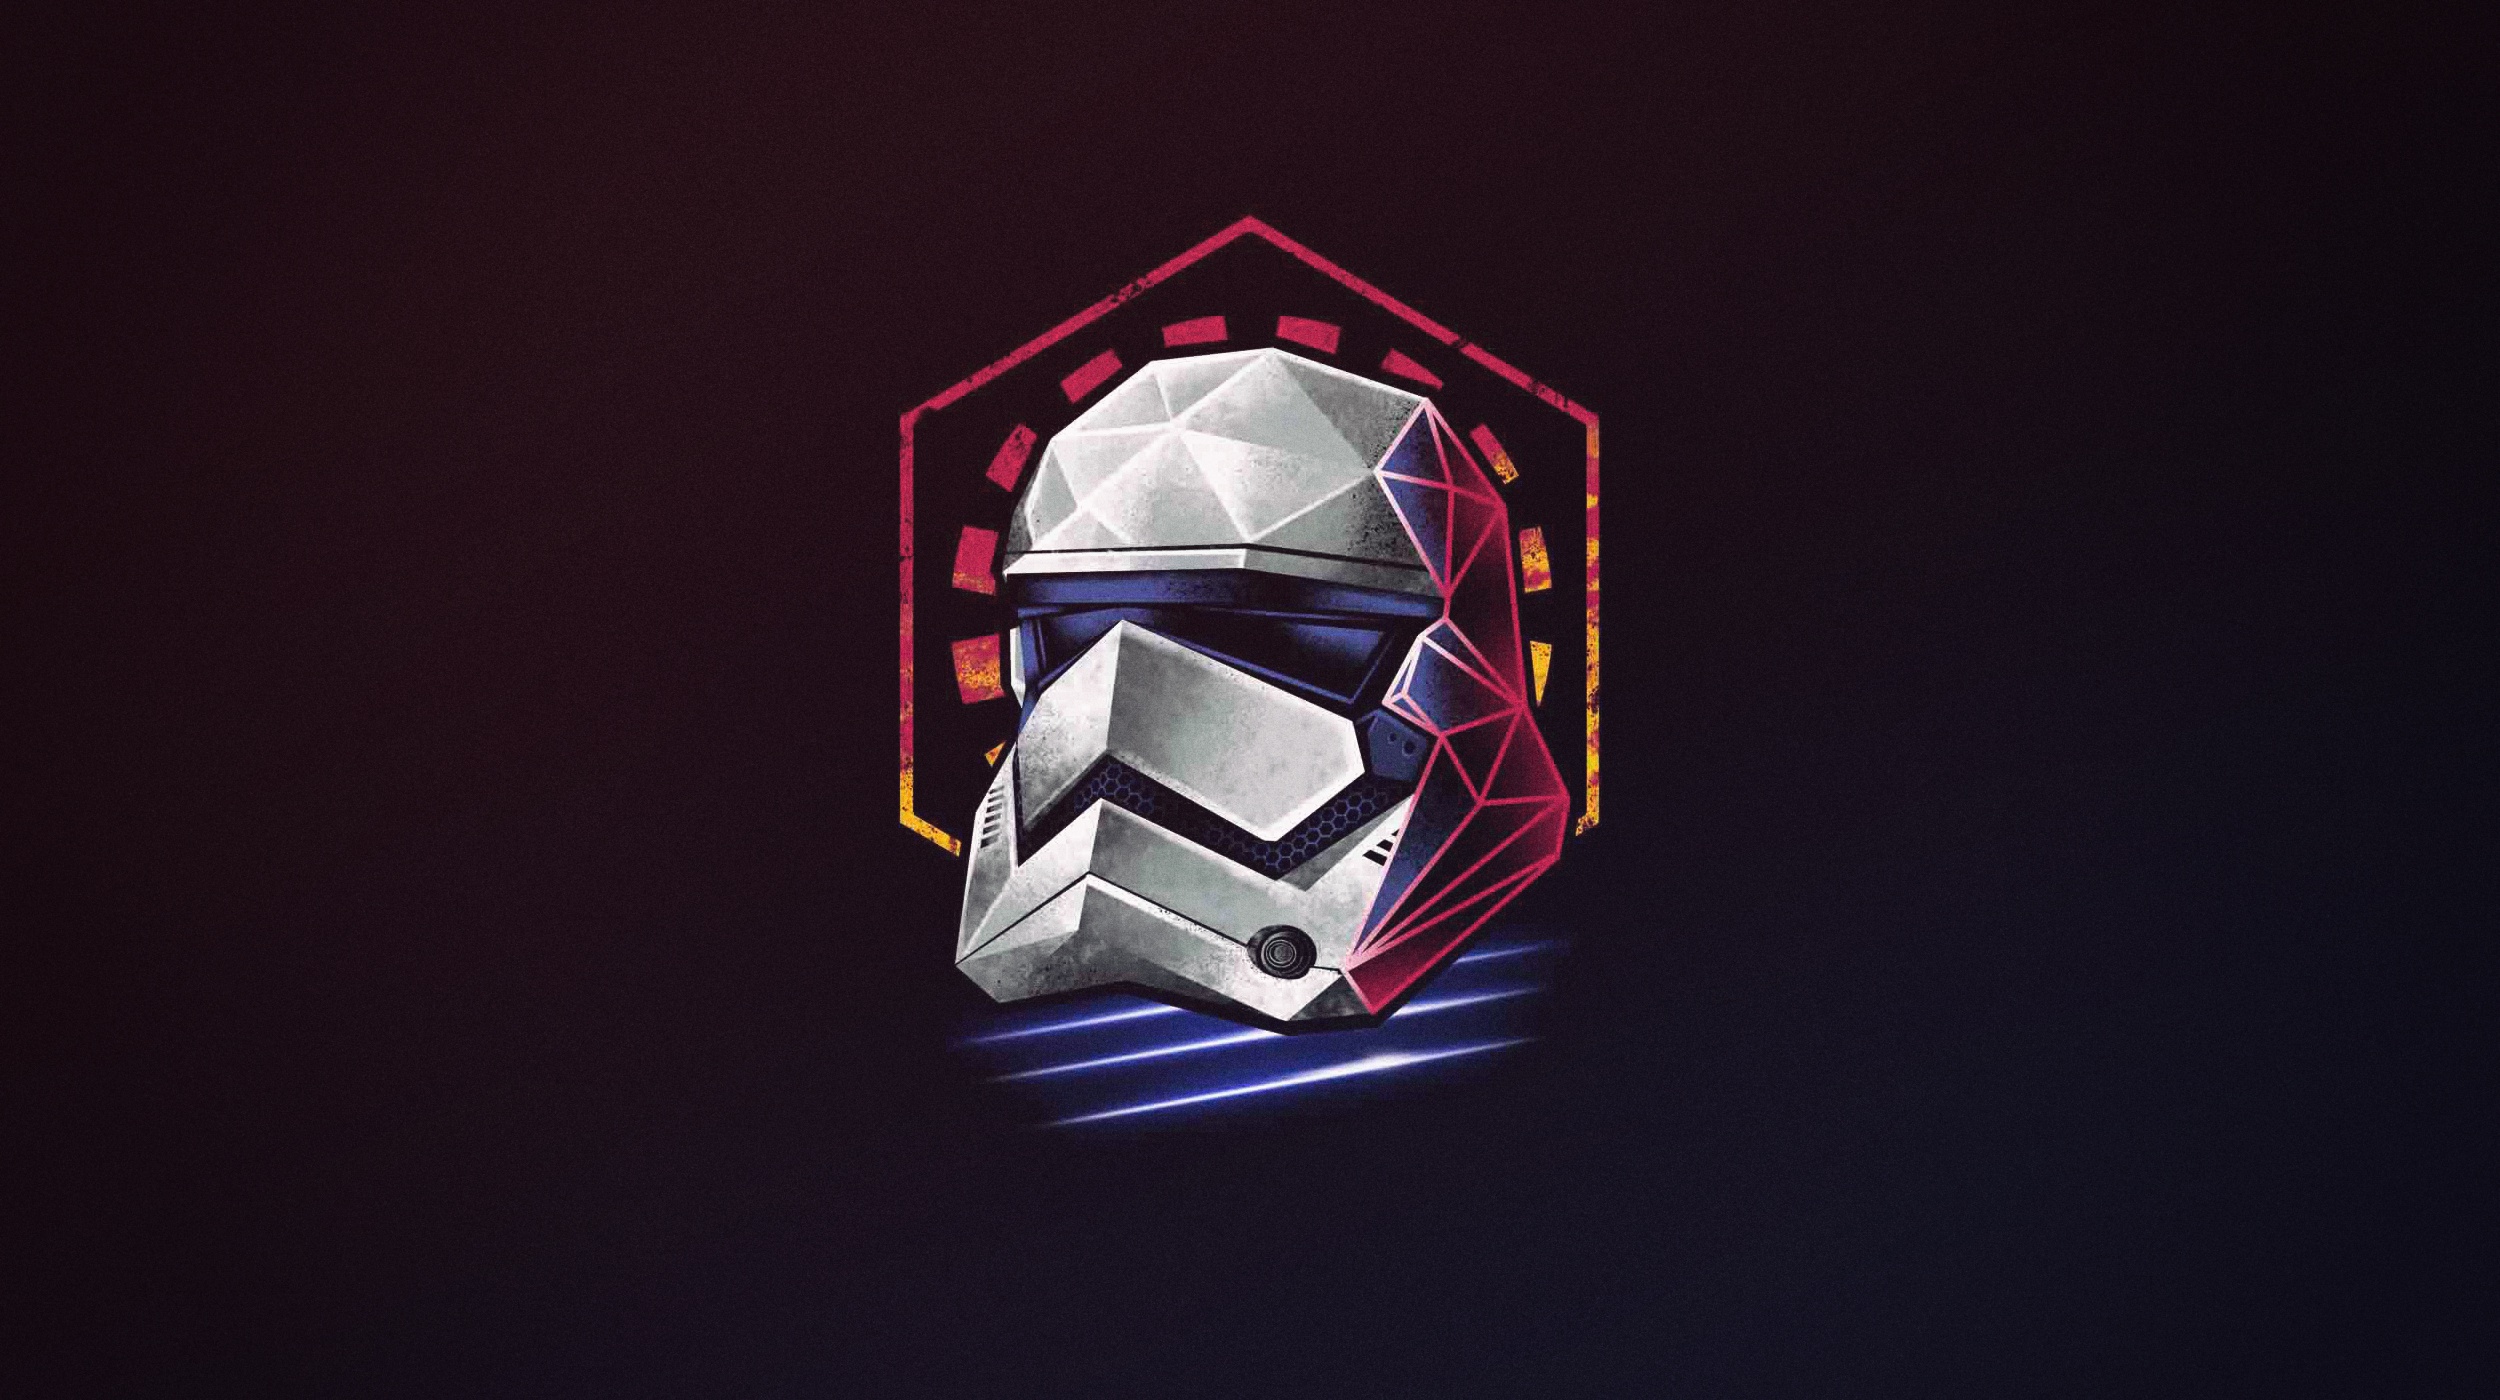 Stormtrooper Helmet Minimalist, HD Artist, 4k Wallpapers, Images